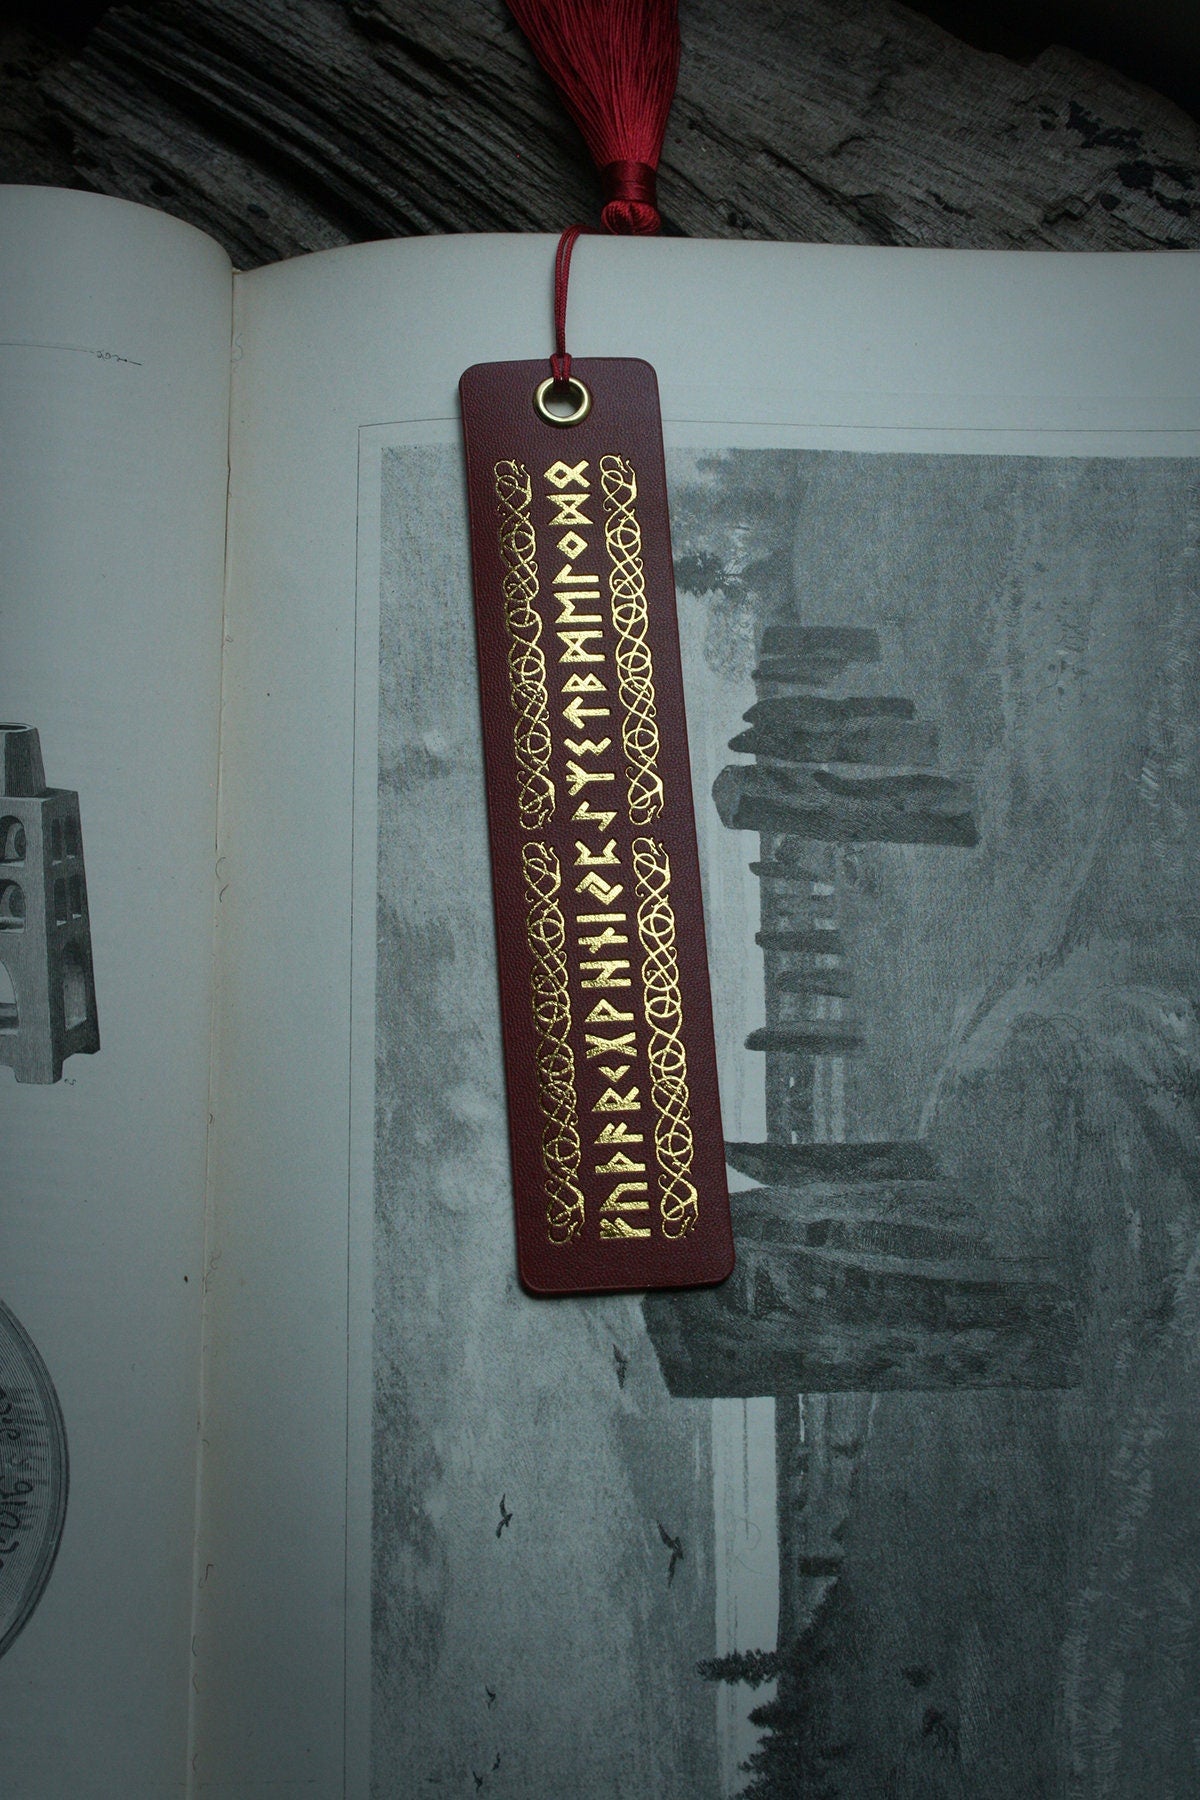 Elder futhark runes, red vegan leather, gold printing - Bookmark